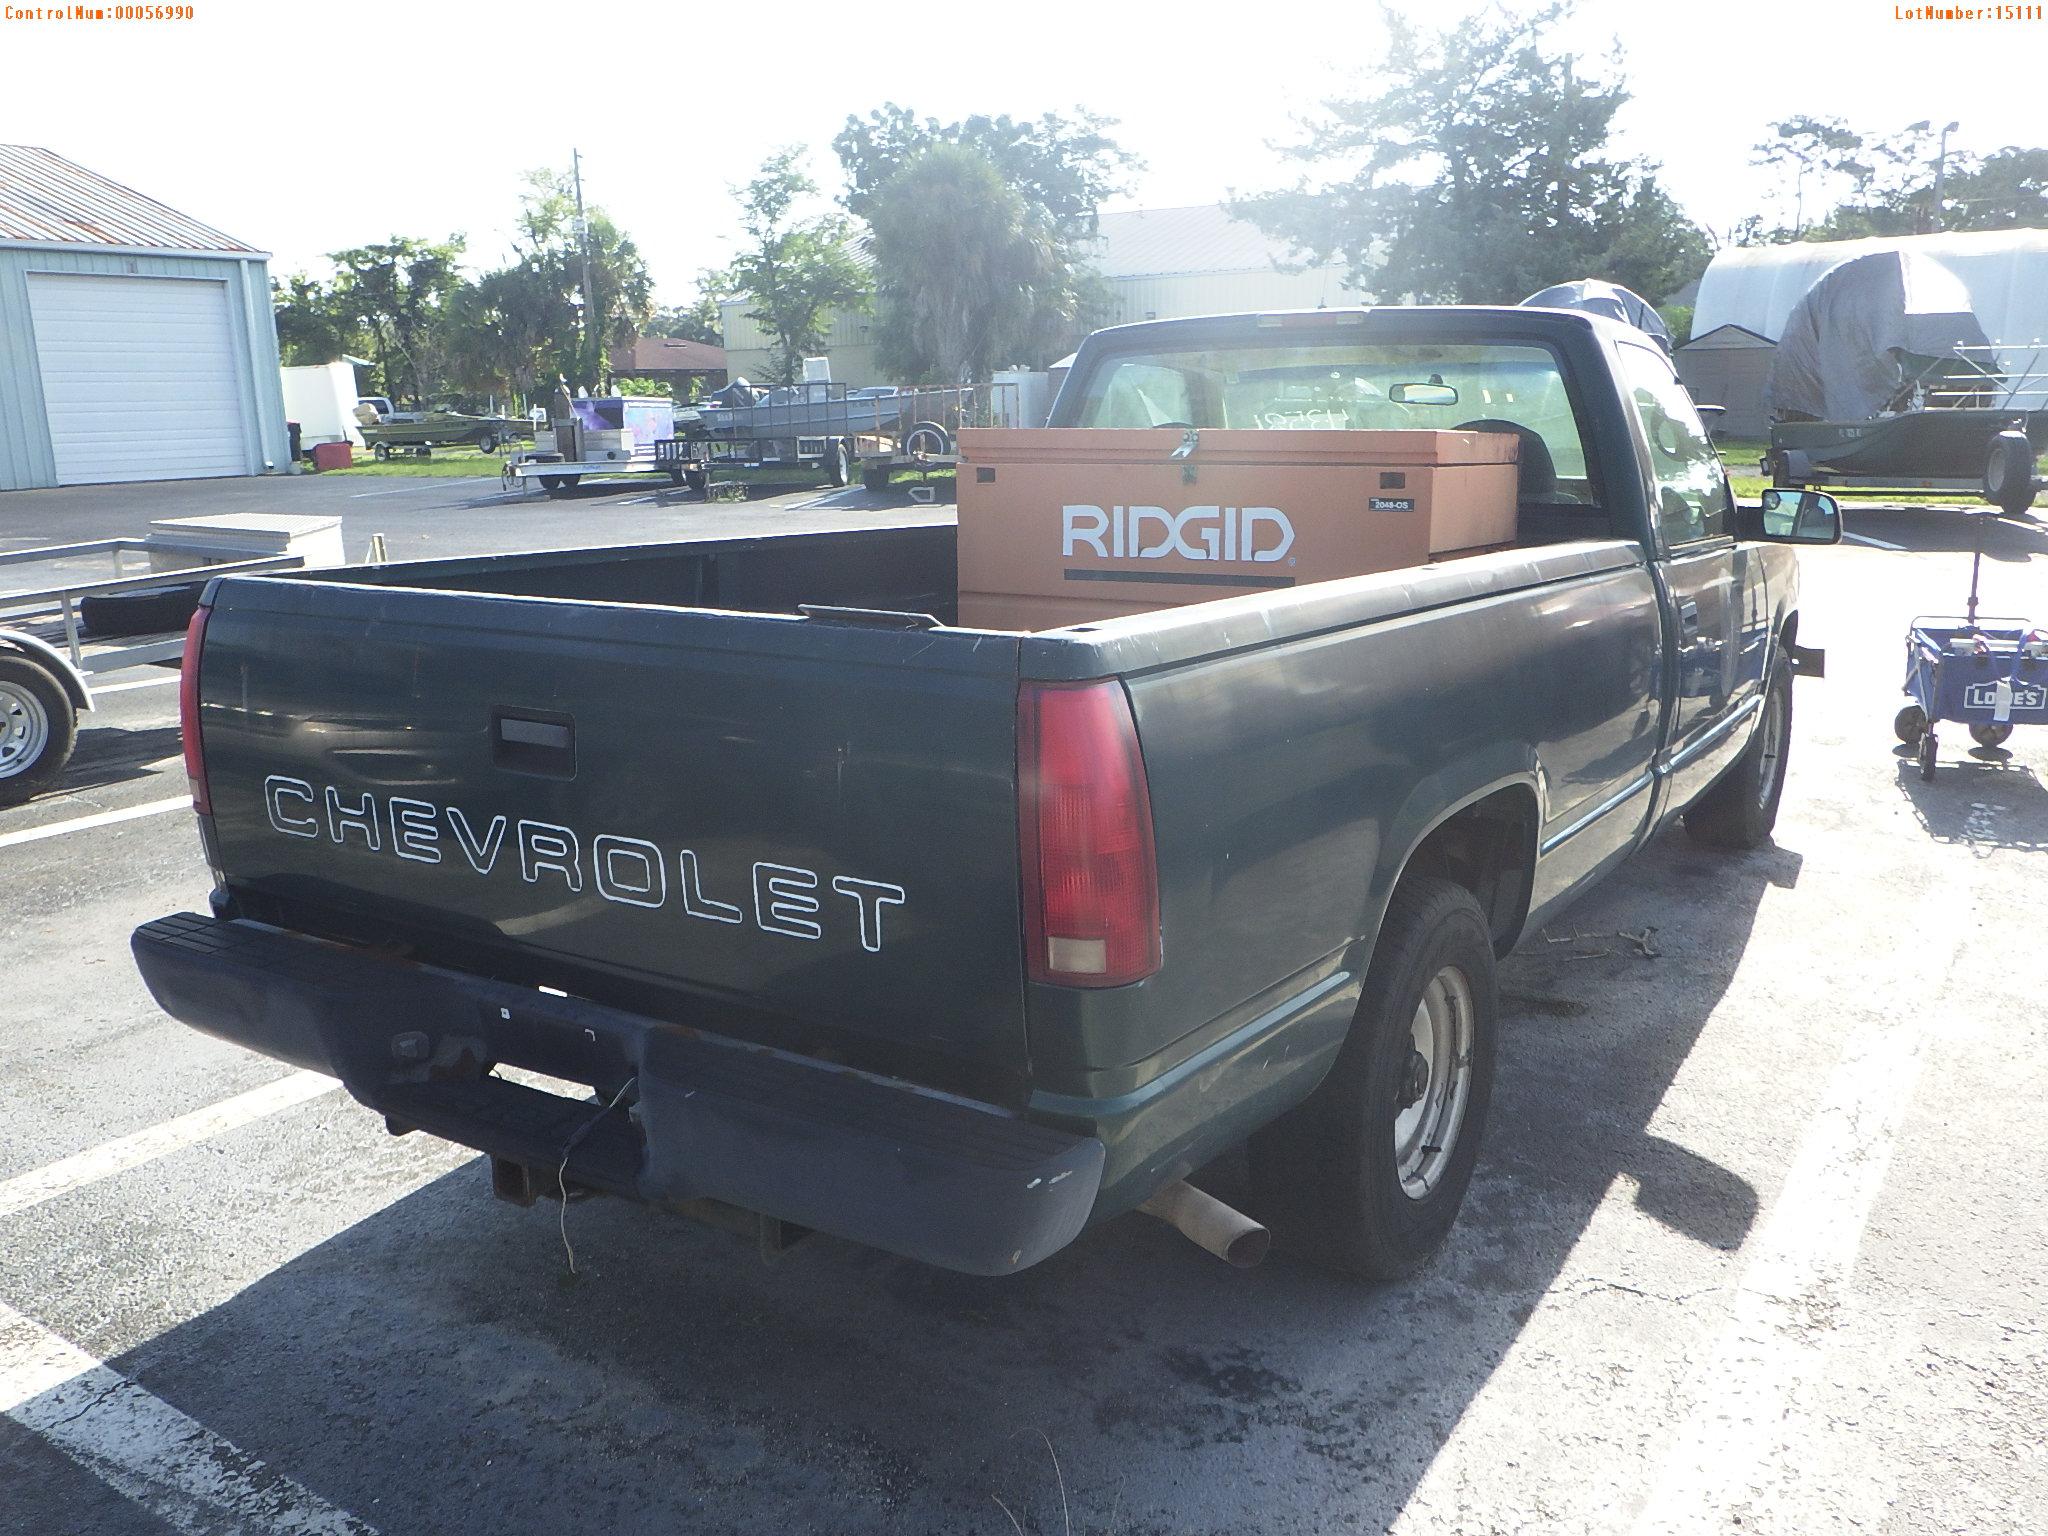 8-15111 (Trucks-Pickup 2D)  Seller: Florida State F.W.C. 1998 CHEV 1500